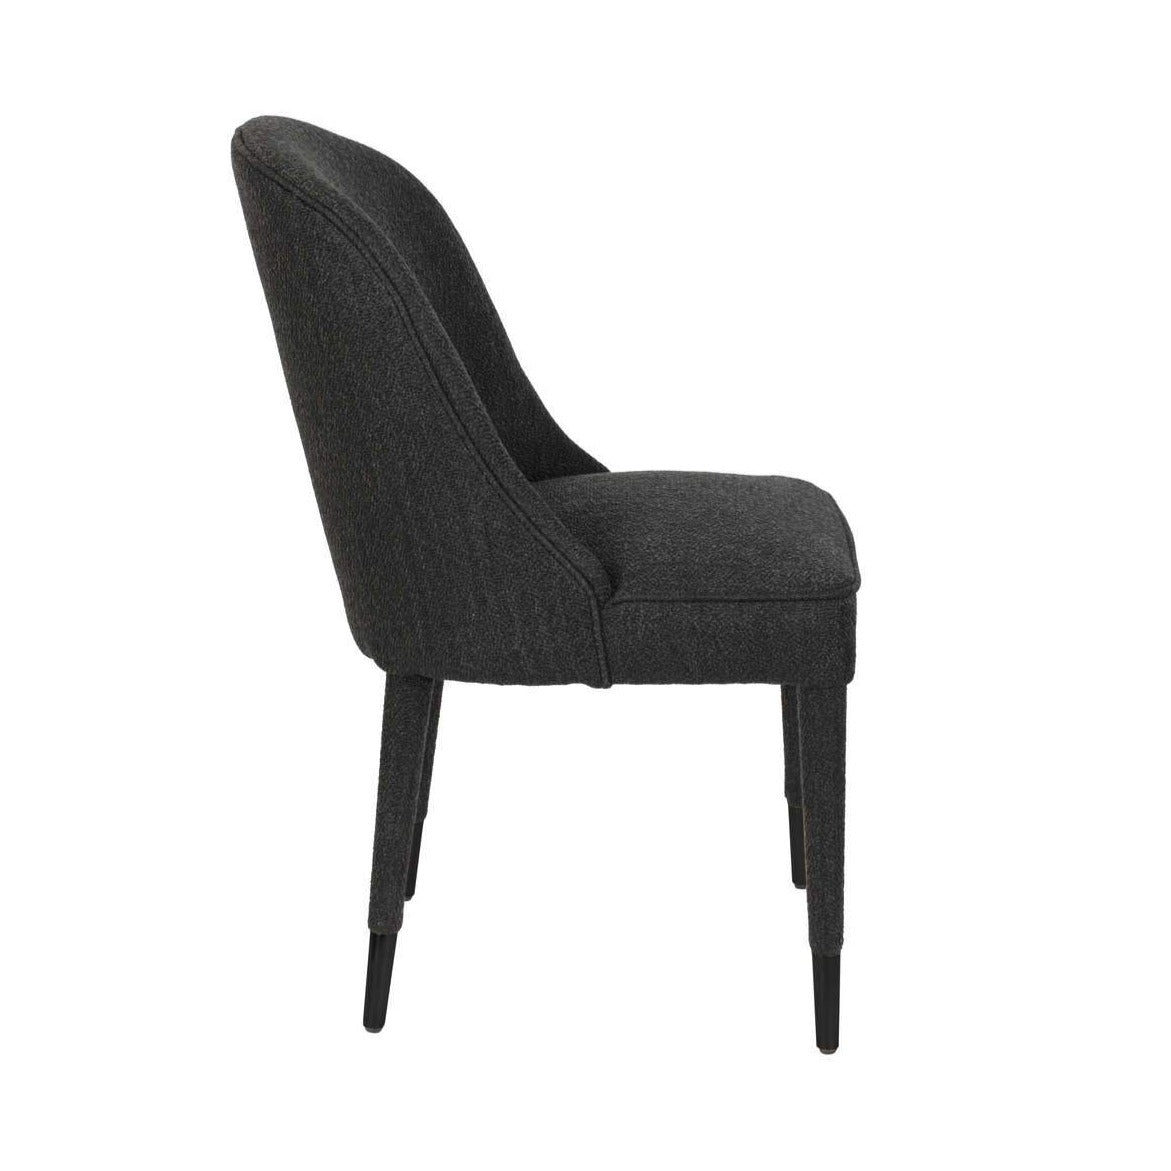 BURTON chair black, Dutchbone, Eye on Design